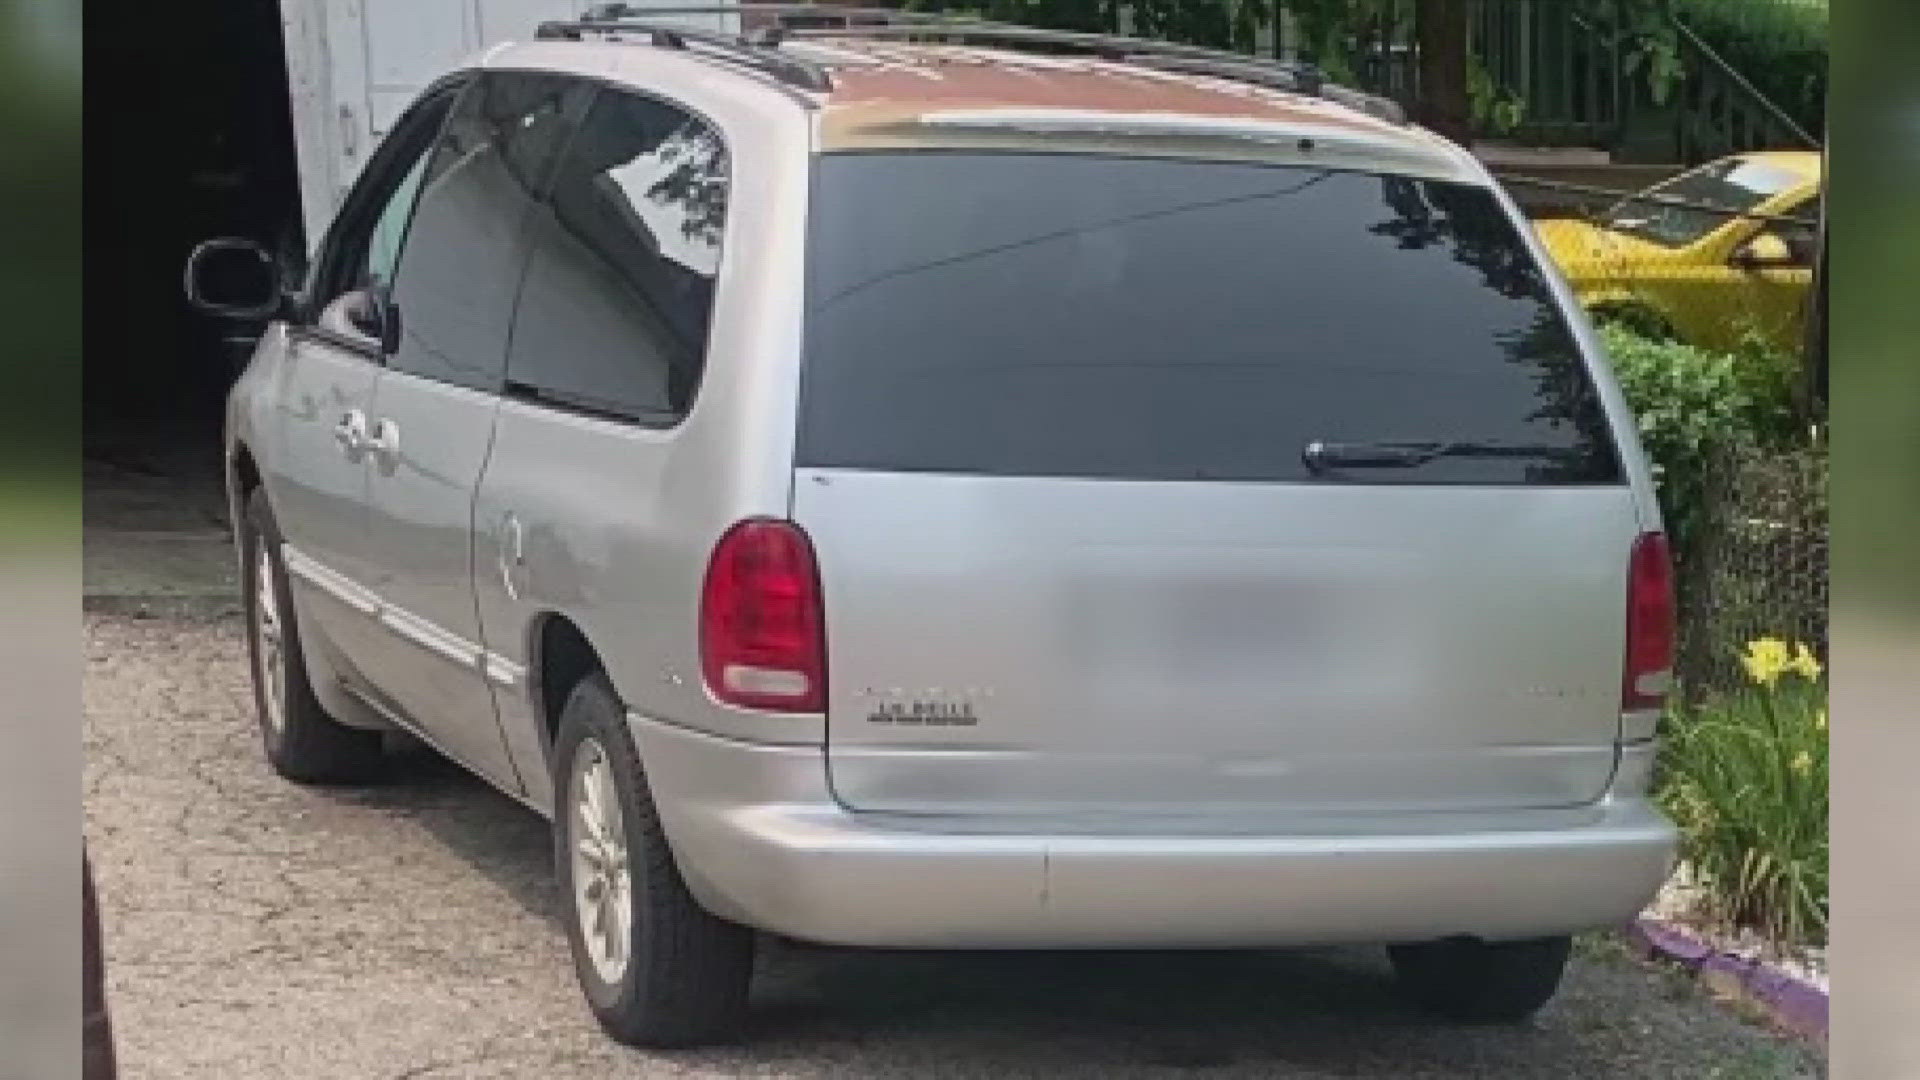 81-year-old Cleveland woman minivan stolen | wkyc.com